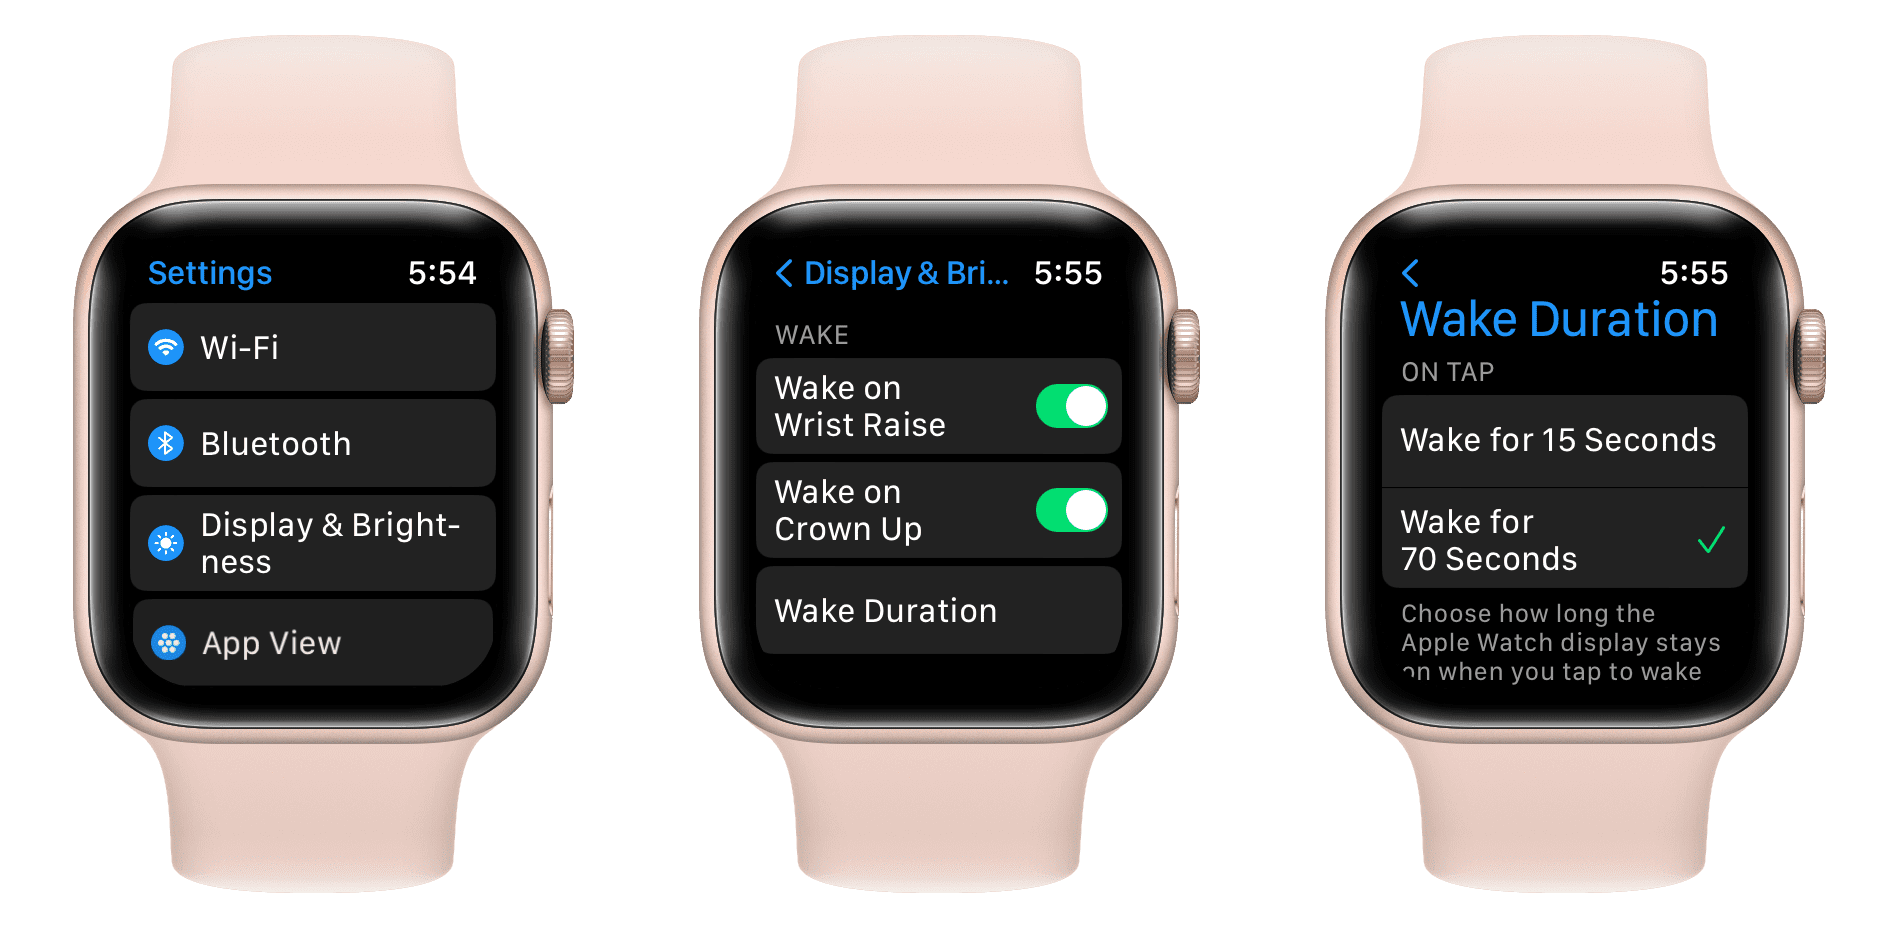 Wake duration settings on Apple Watch